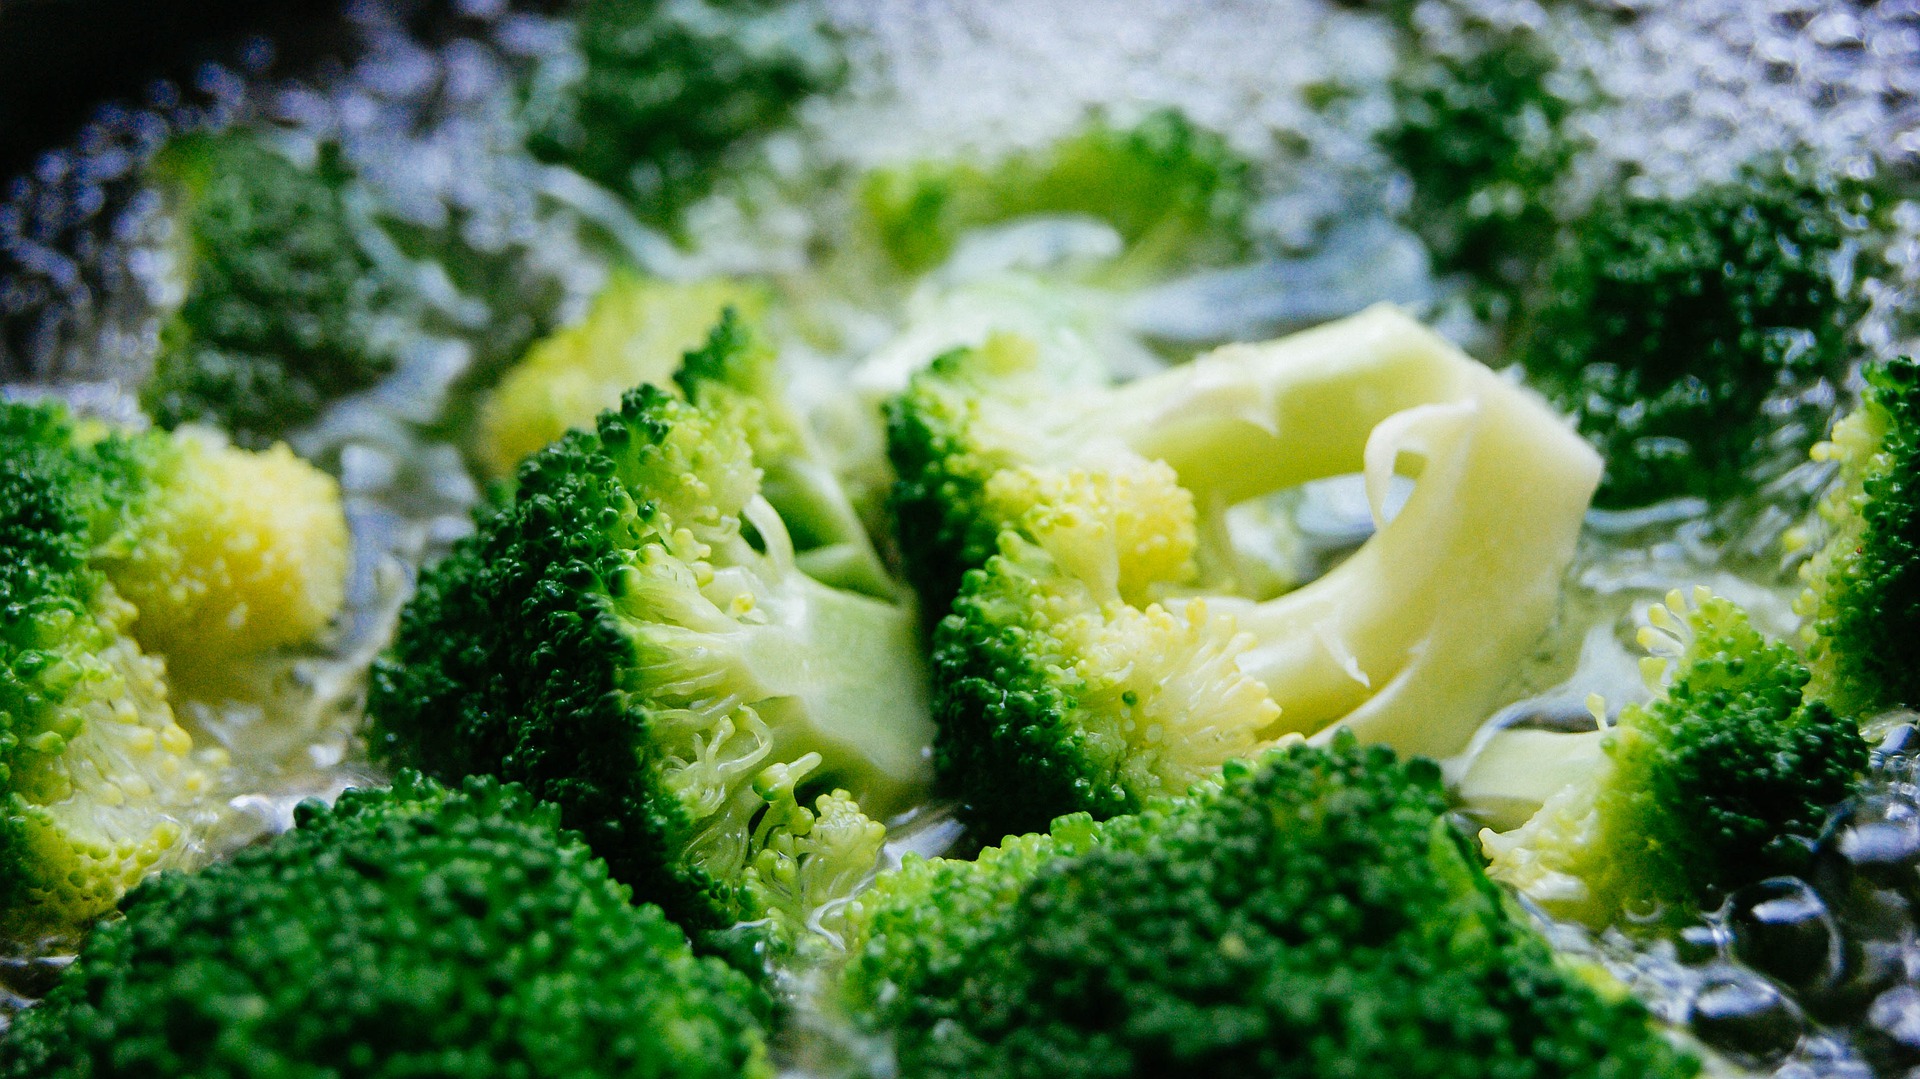 Eat your broccoli